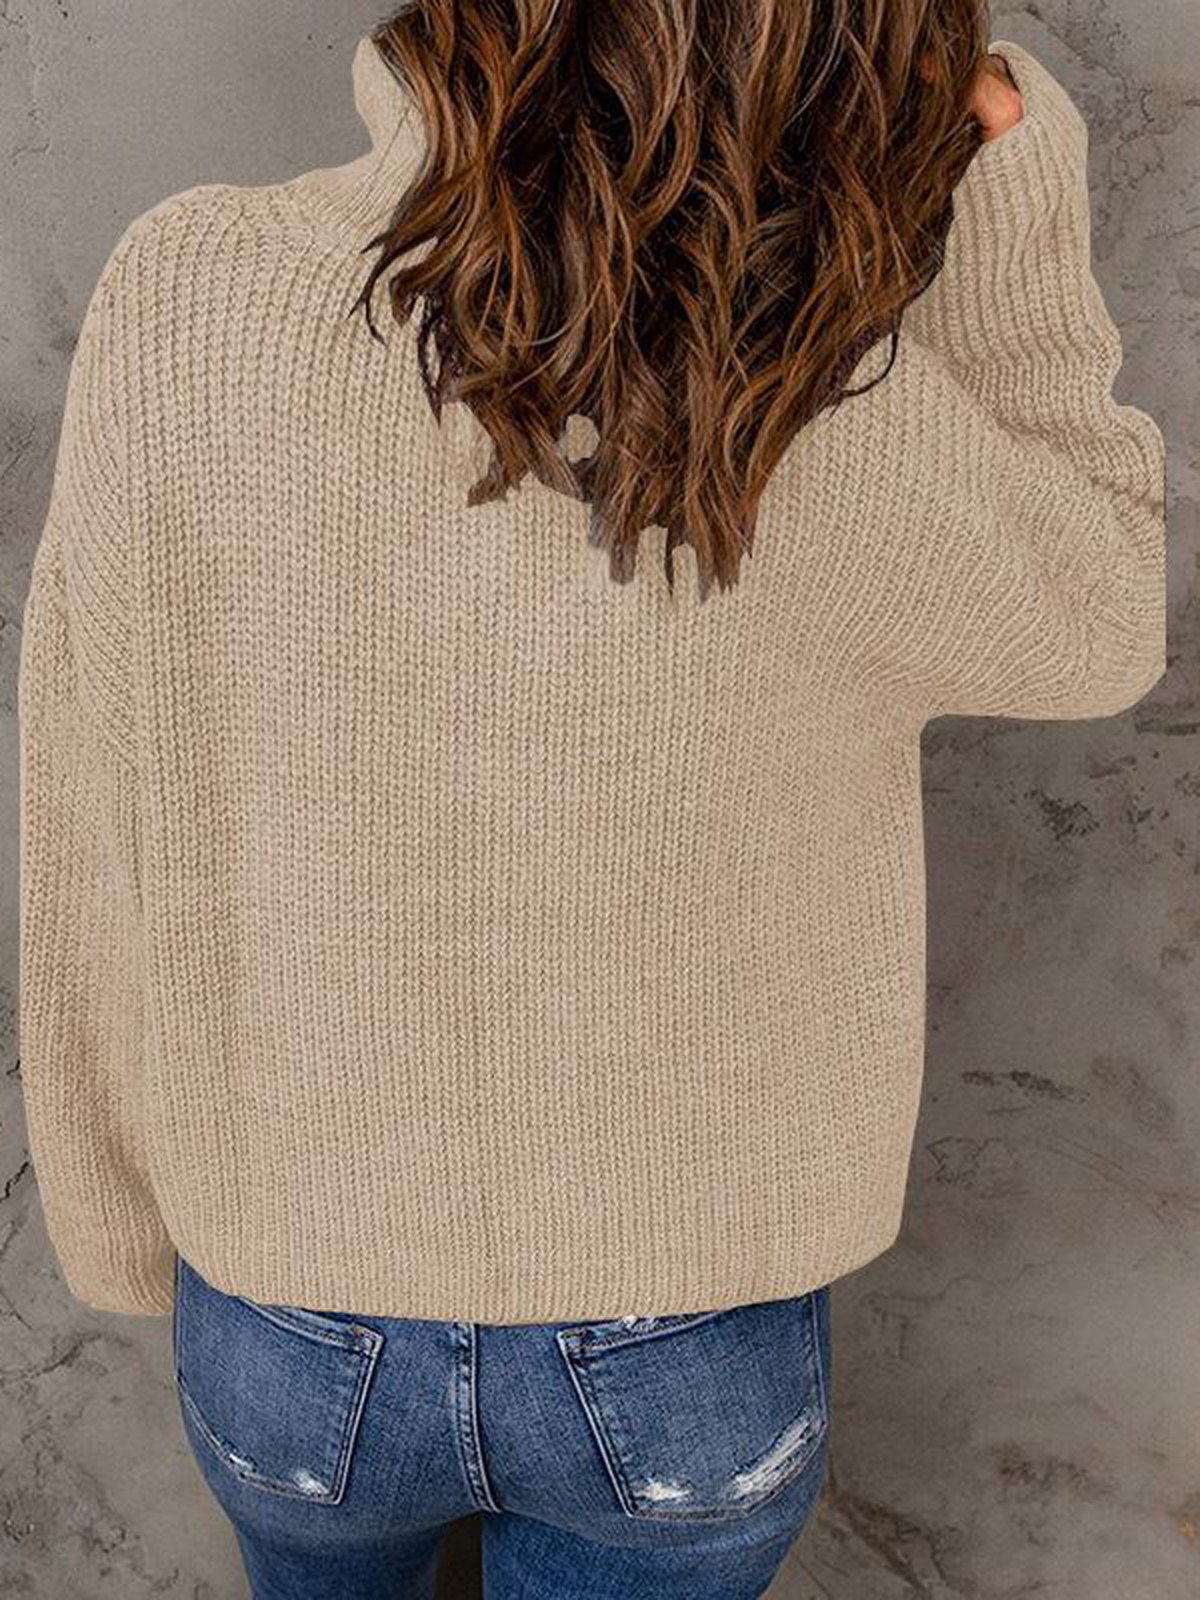 Women Wool/Knitting Plain Long Sleeve Comfy Casual Zipper Sweater